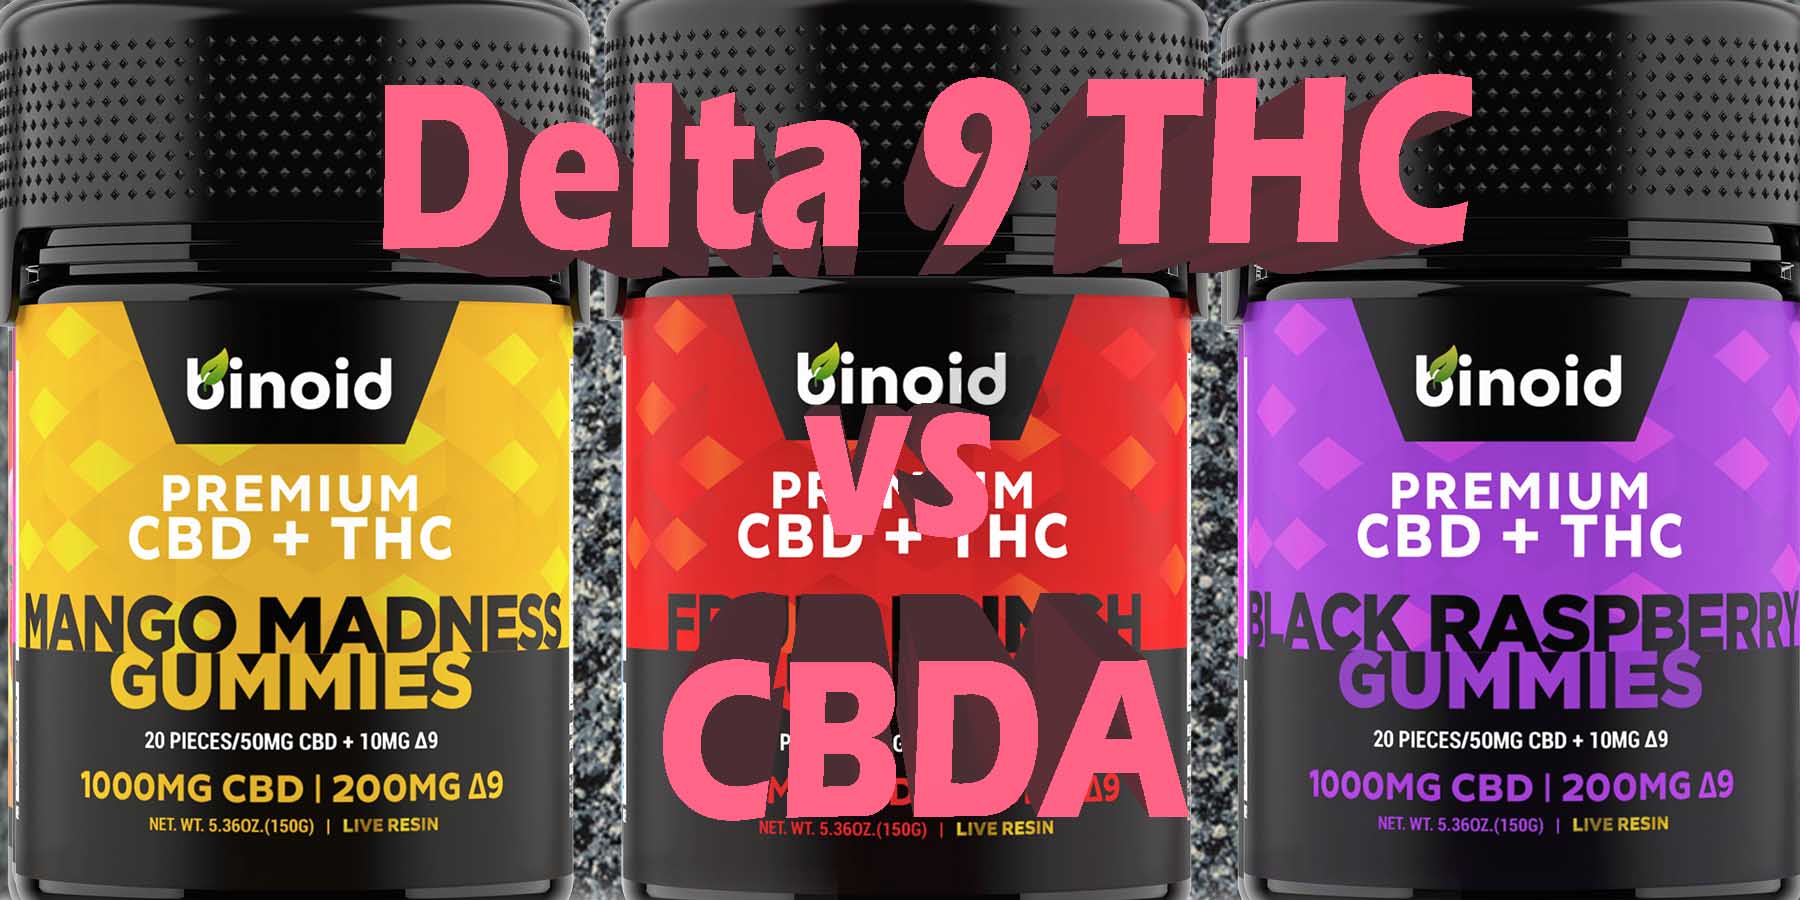 Delta 9 THC vs CBDA BestBrand GoodPrice GetNearMe LowestCoupon DiscountStore Shoponline VapeCarts Online StrongestSmoke ShopBinoid THC